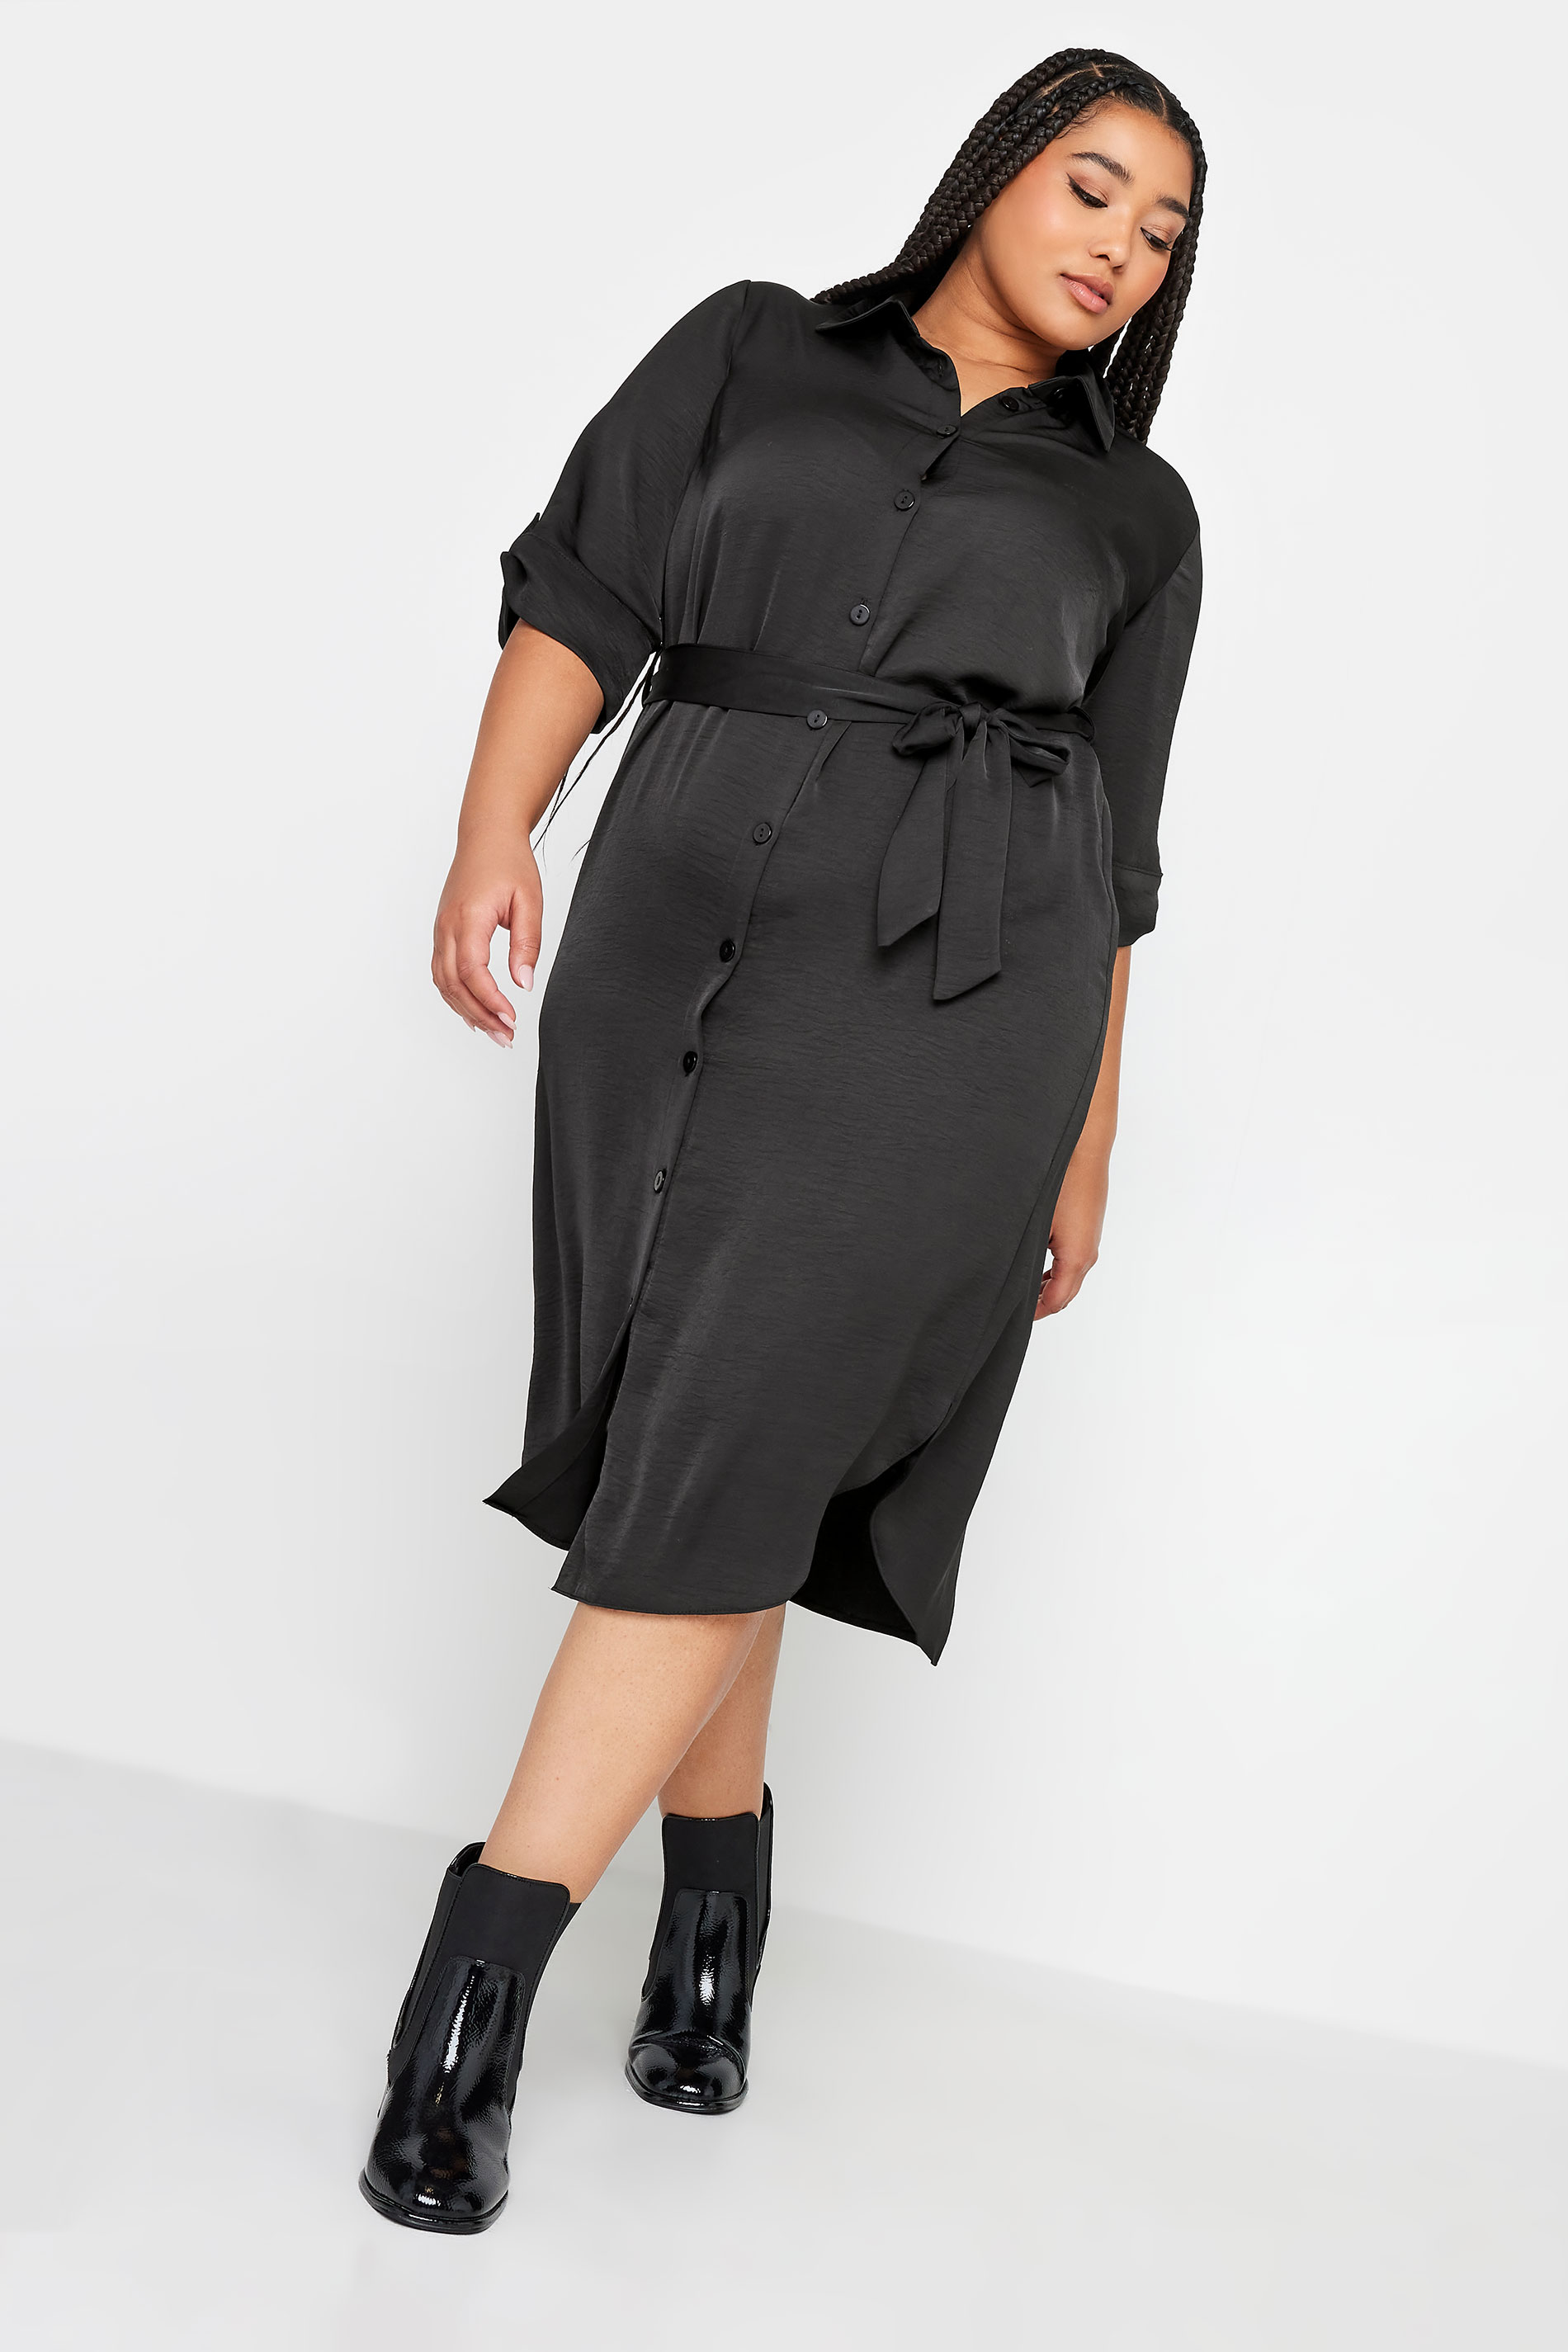 YOURS Plus Size Black Midi Shirt Dress | Yours Clothing 1